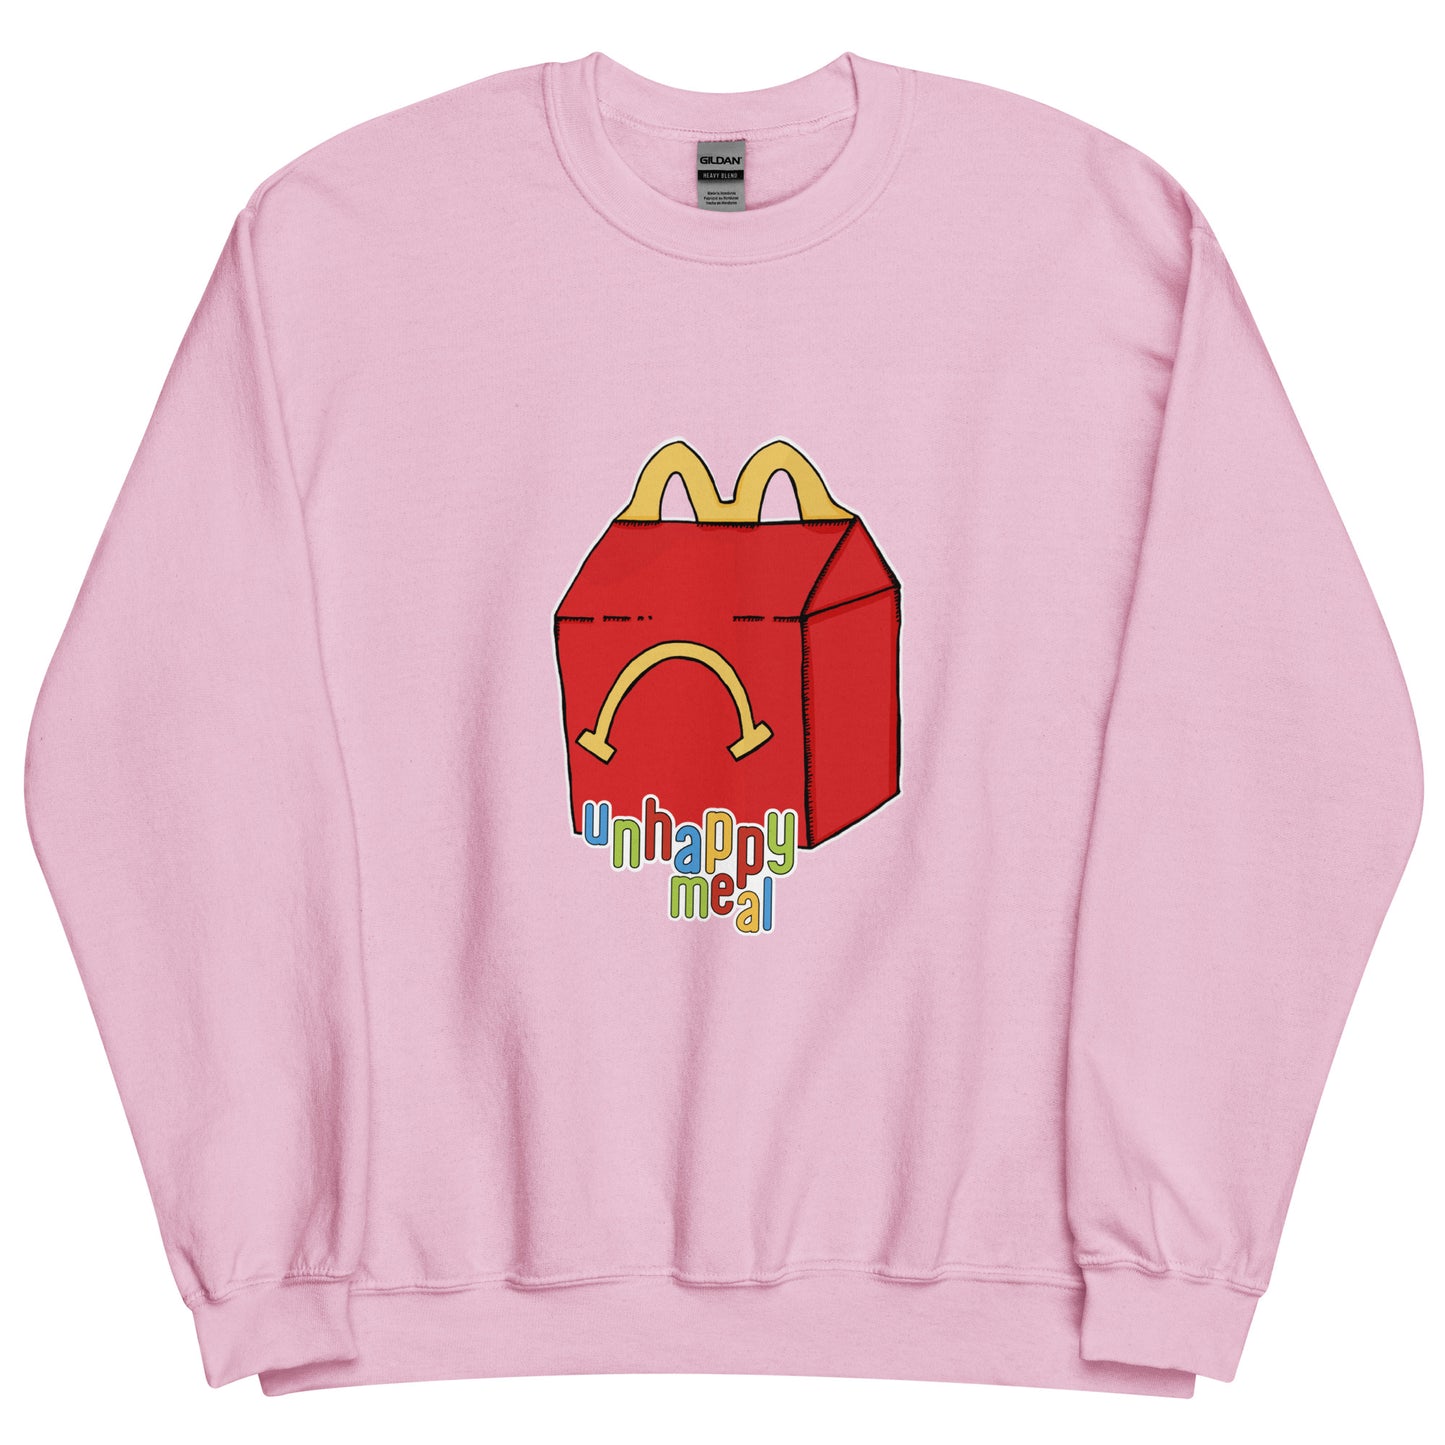 unhappy meal sweatshirt in pink - gaslit apparel